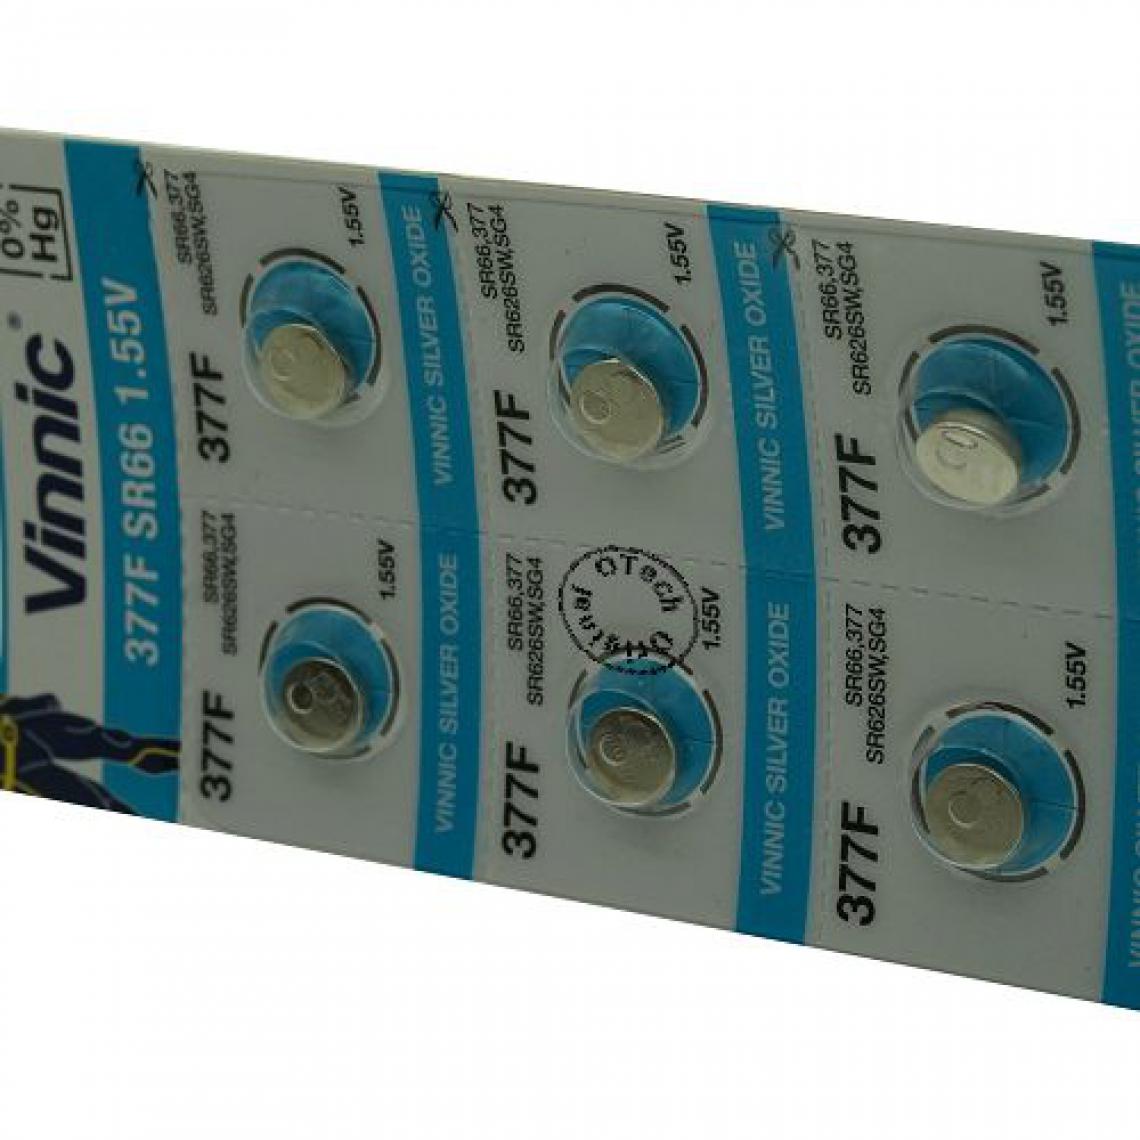 Otech - Pack de 10 piles Vinnic pour SWATCH SKIN CHRONO - Piles rechargeables